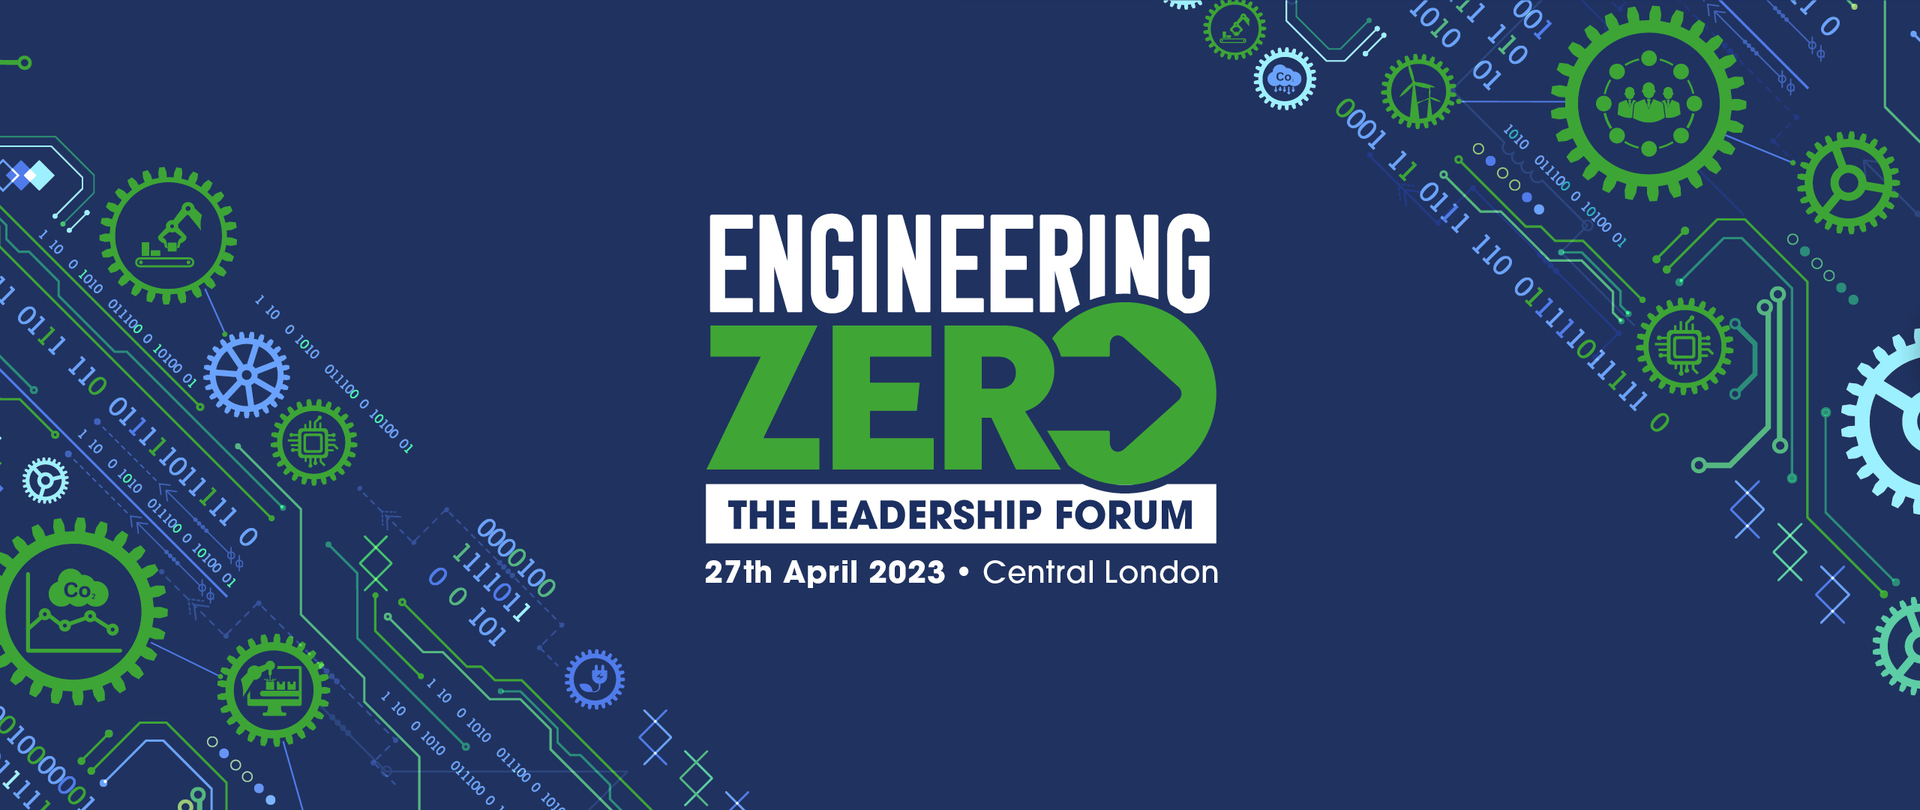 Engineering Zero - The Leadership Forum, London, England, United Kingdom